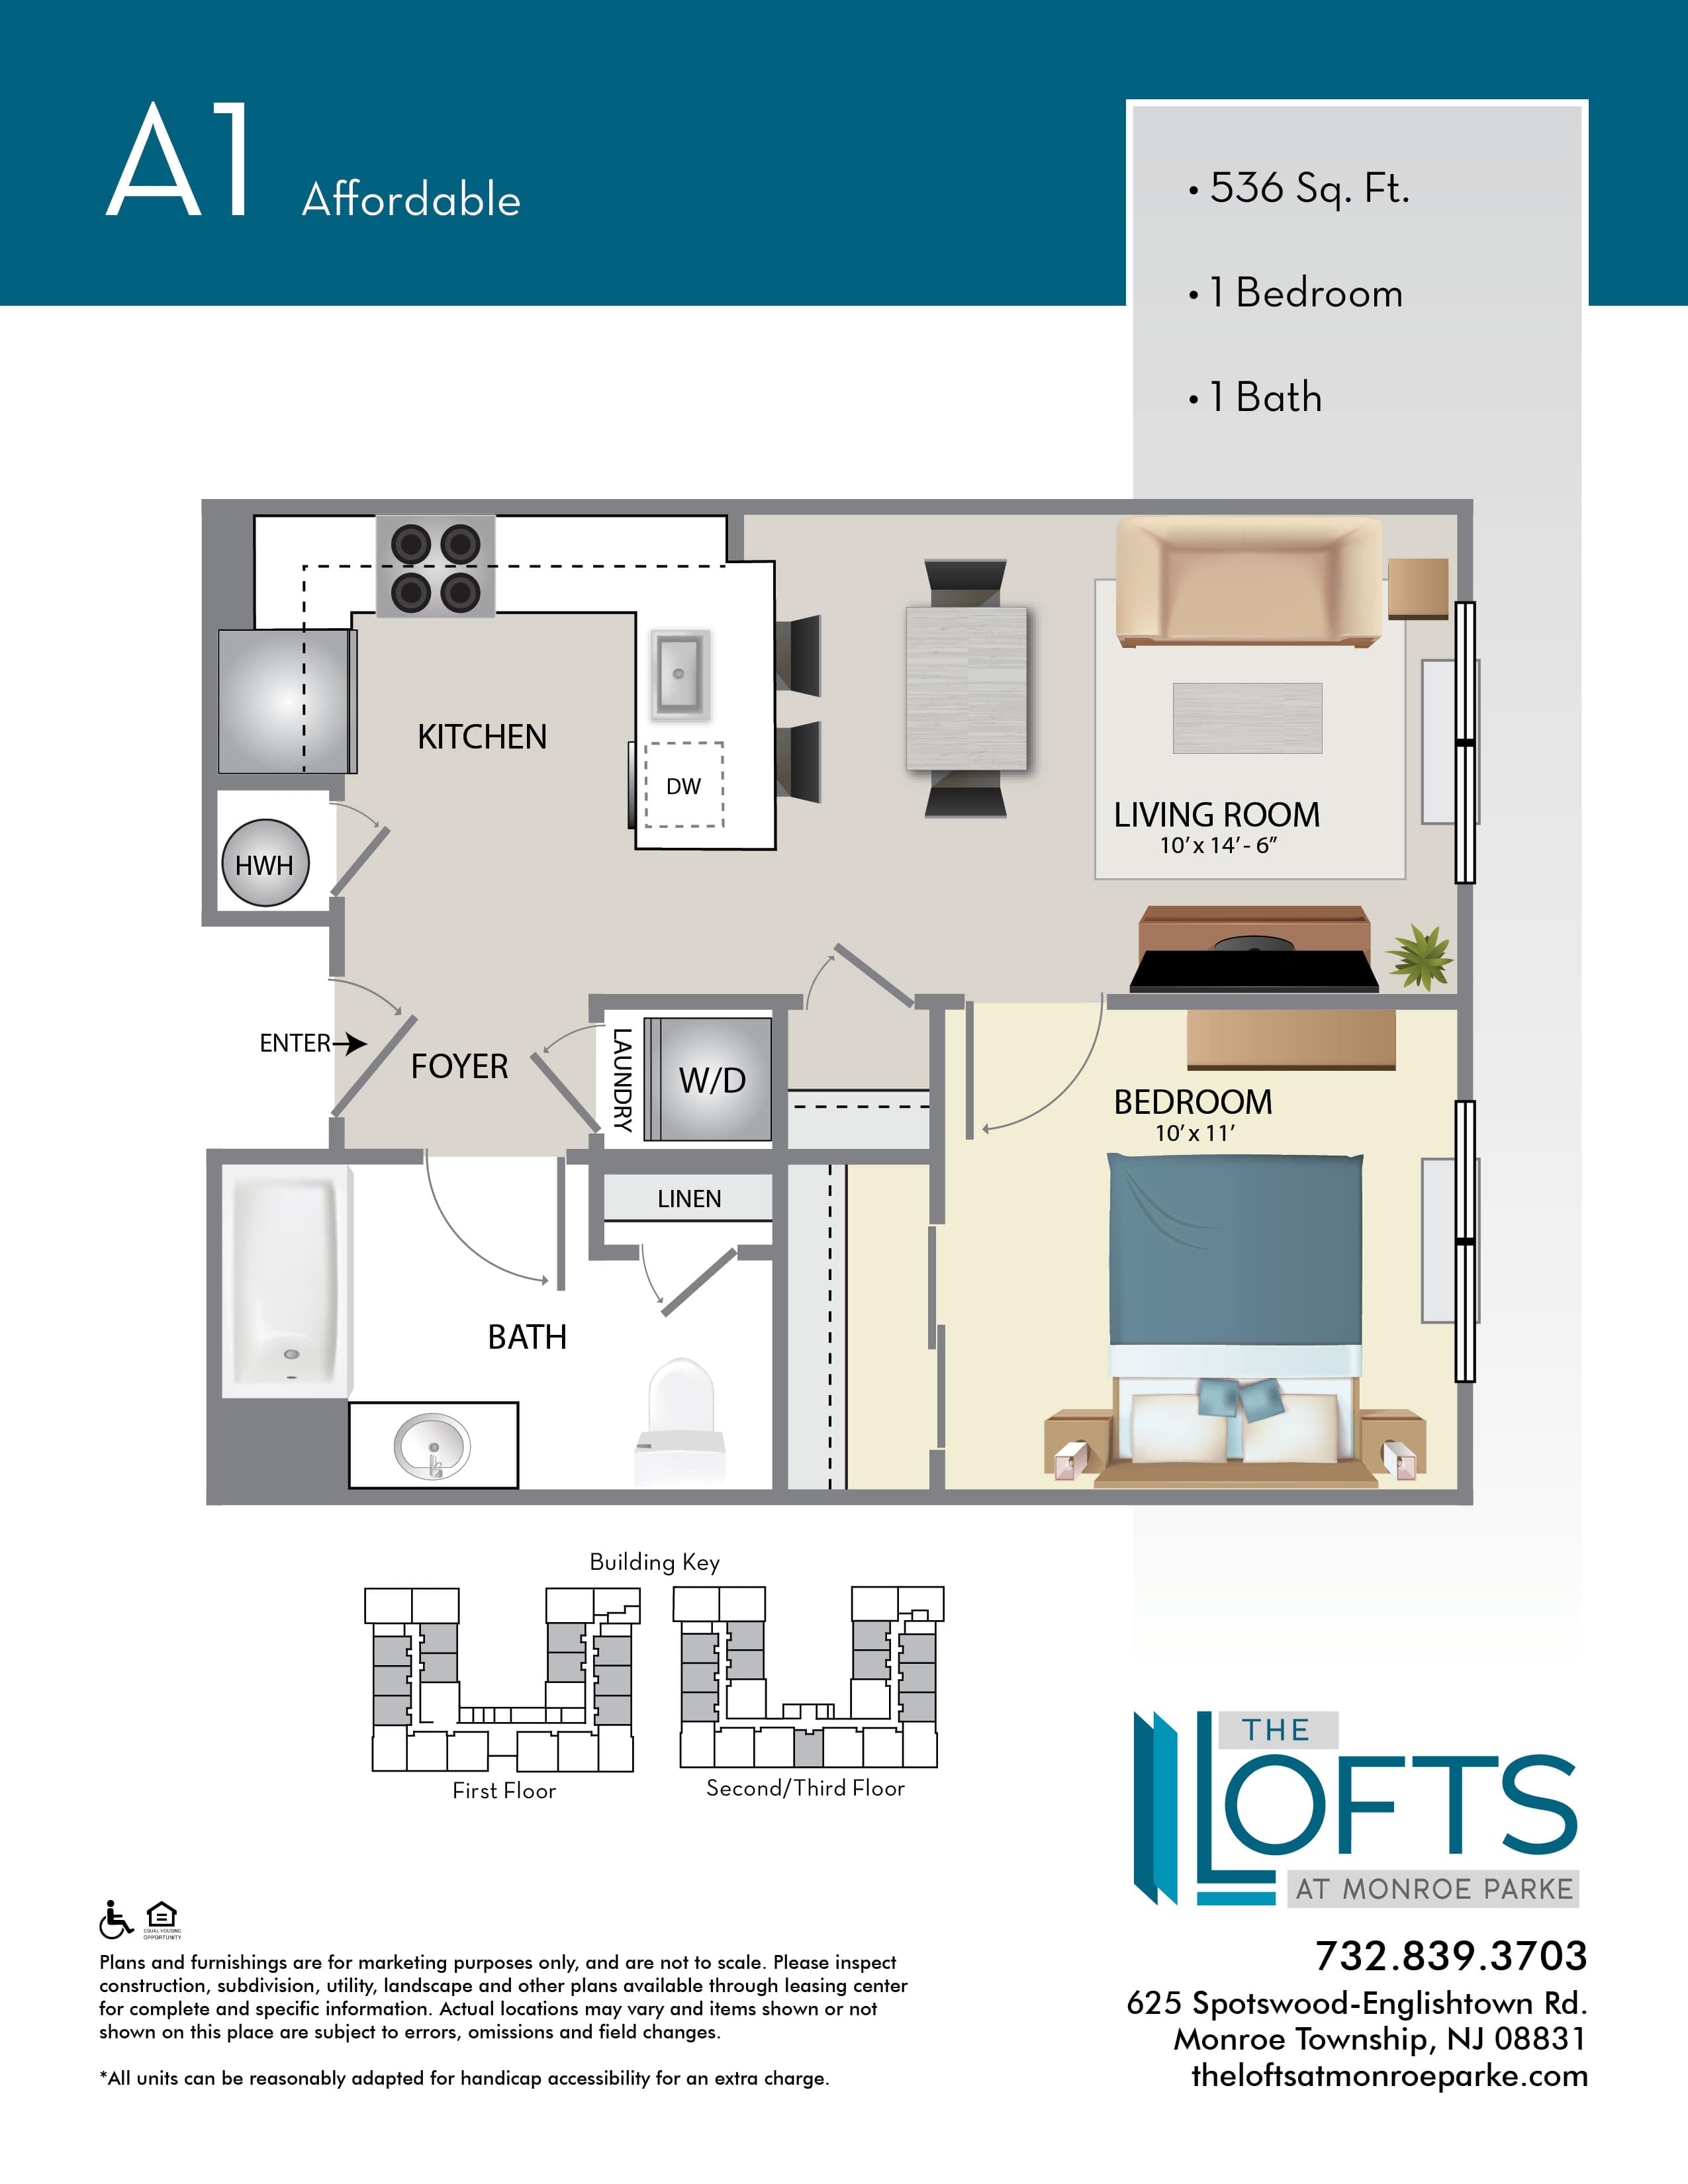 The Lofts at Monroe Park Apartment Floor Plan A1